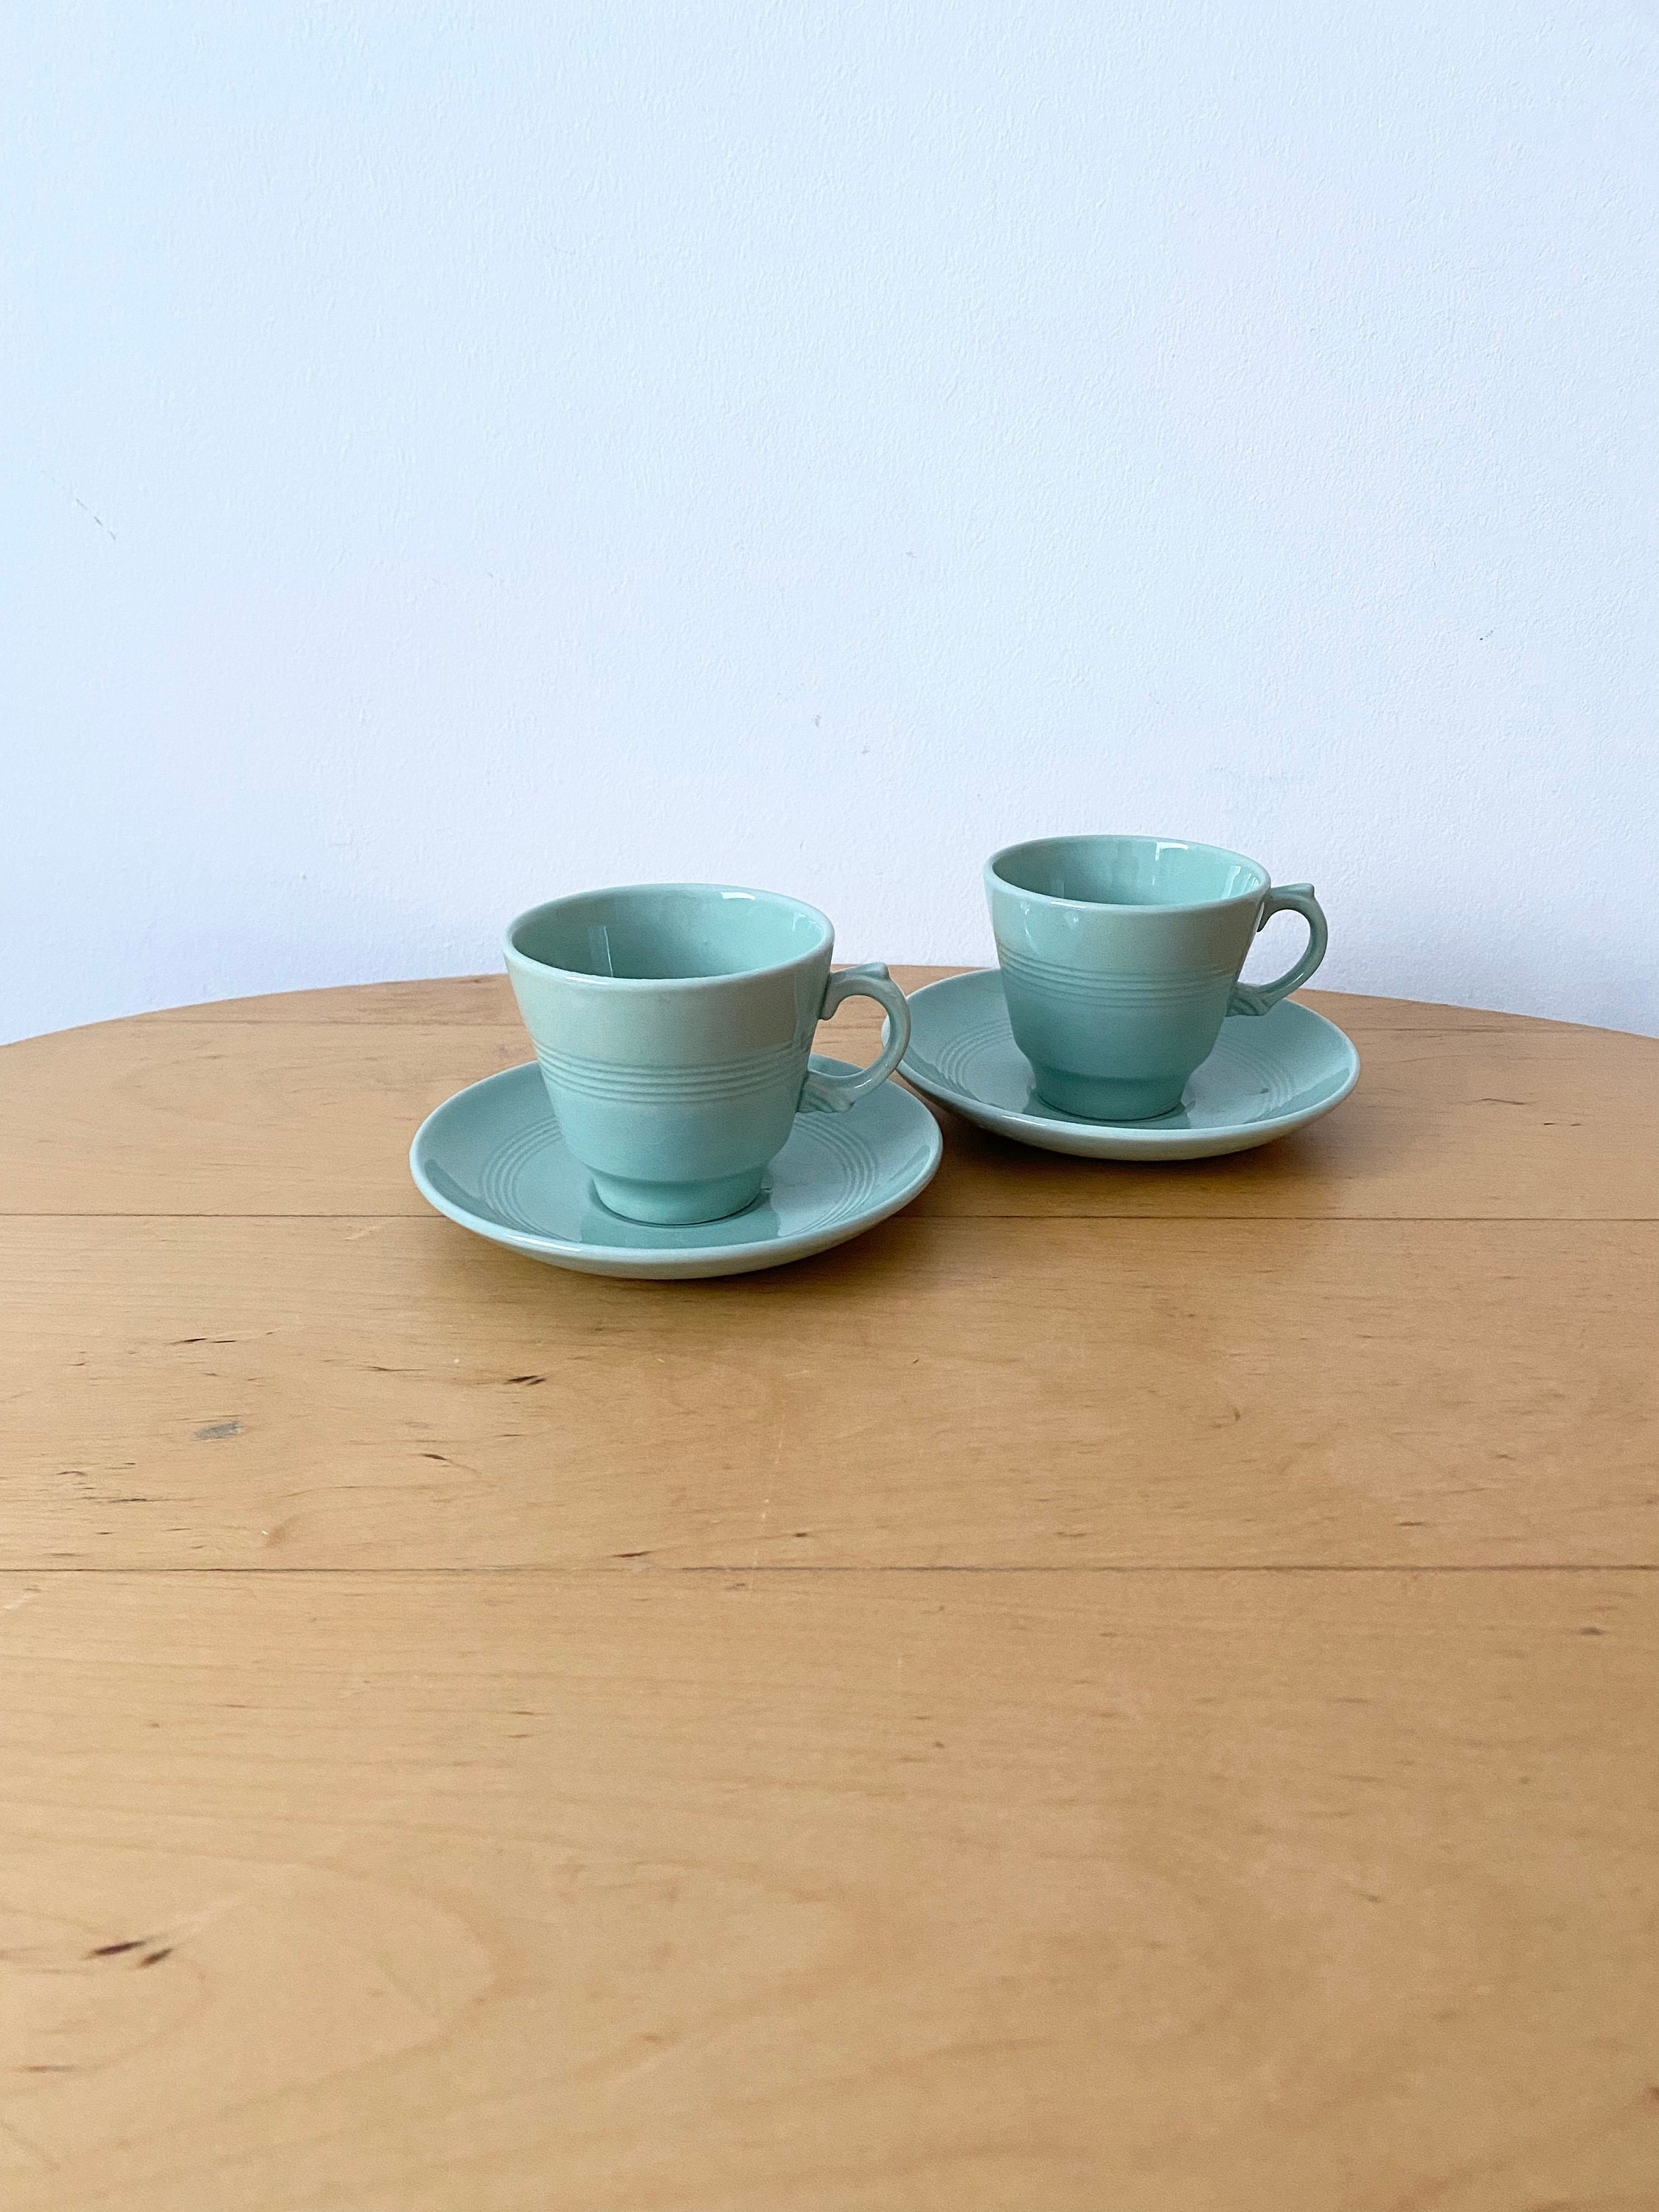 CLASGLAZ 6oz Ceramic Espresso Cups with Wooden Handle, Small  Coffee Cups for Latte Cappuccino, Tea Cups Set of 4: Espresso Cups